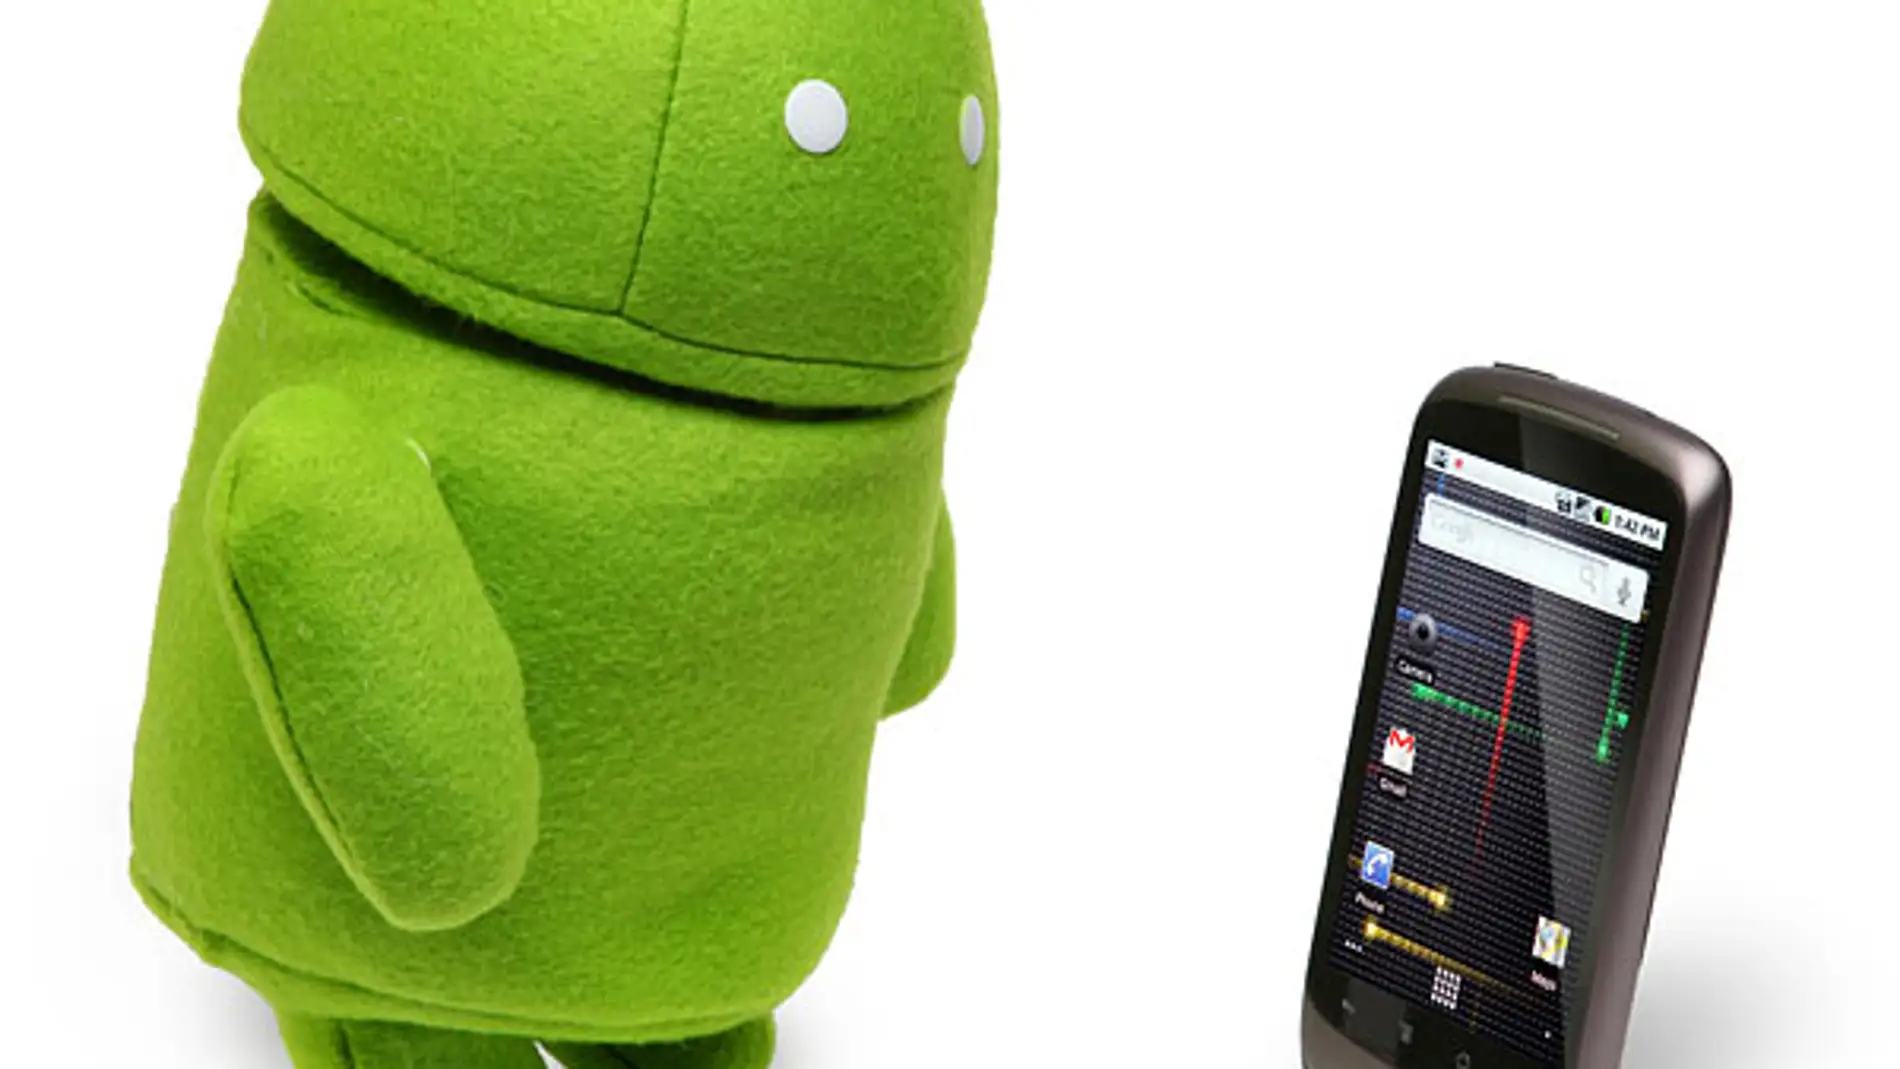 Android, el sistema operativo móvil de Google